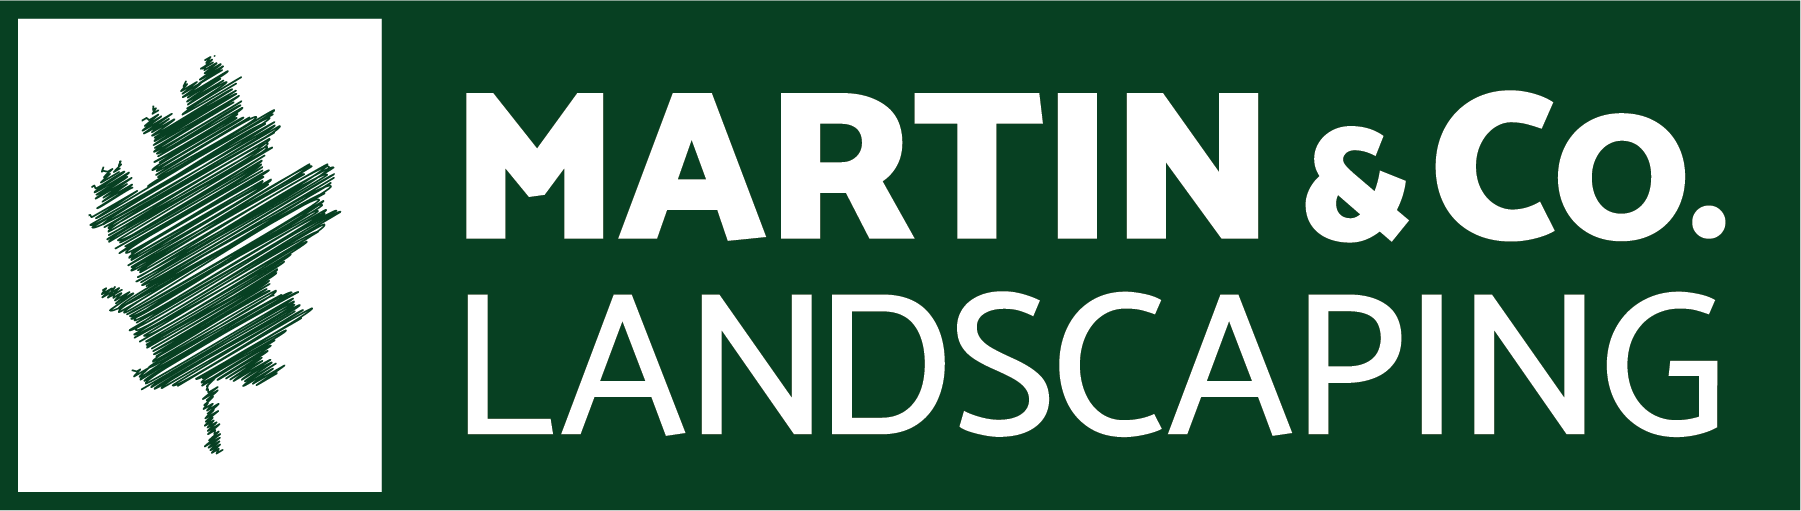 Martin Landscaping logo